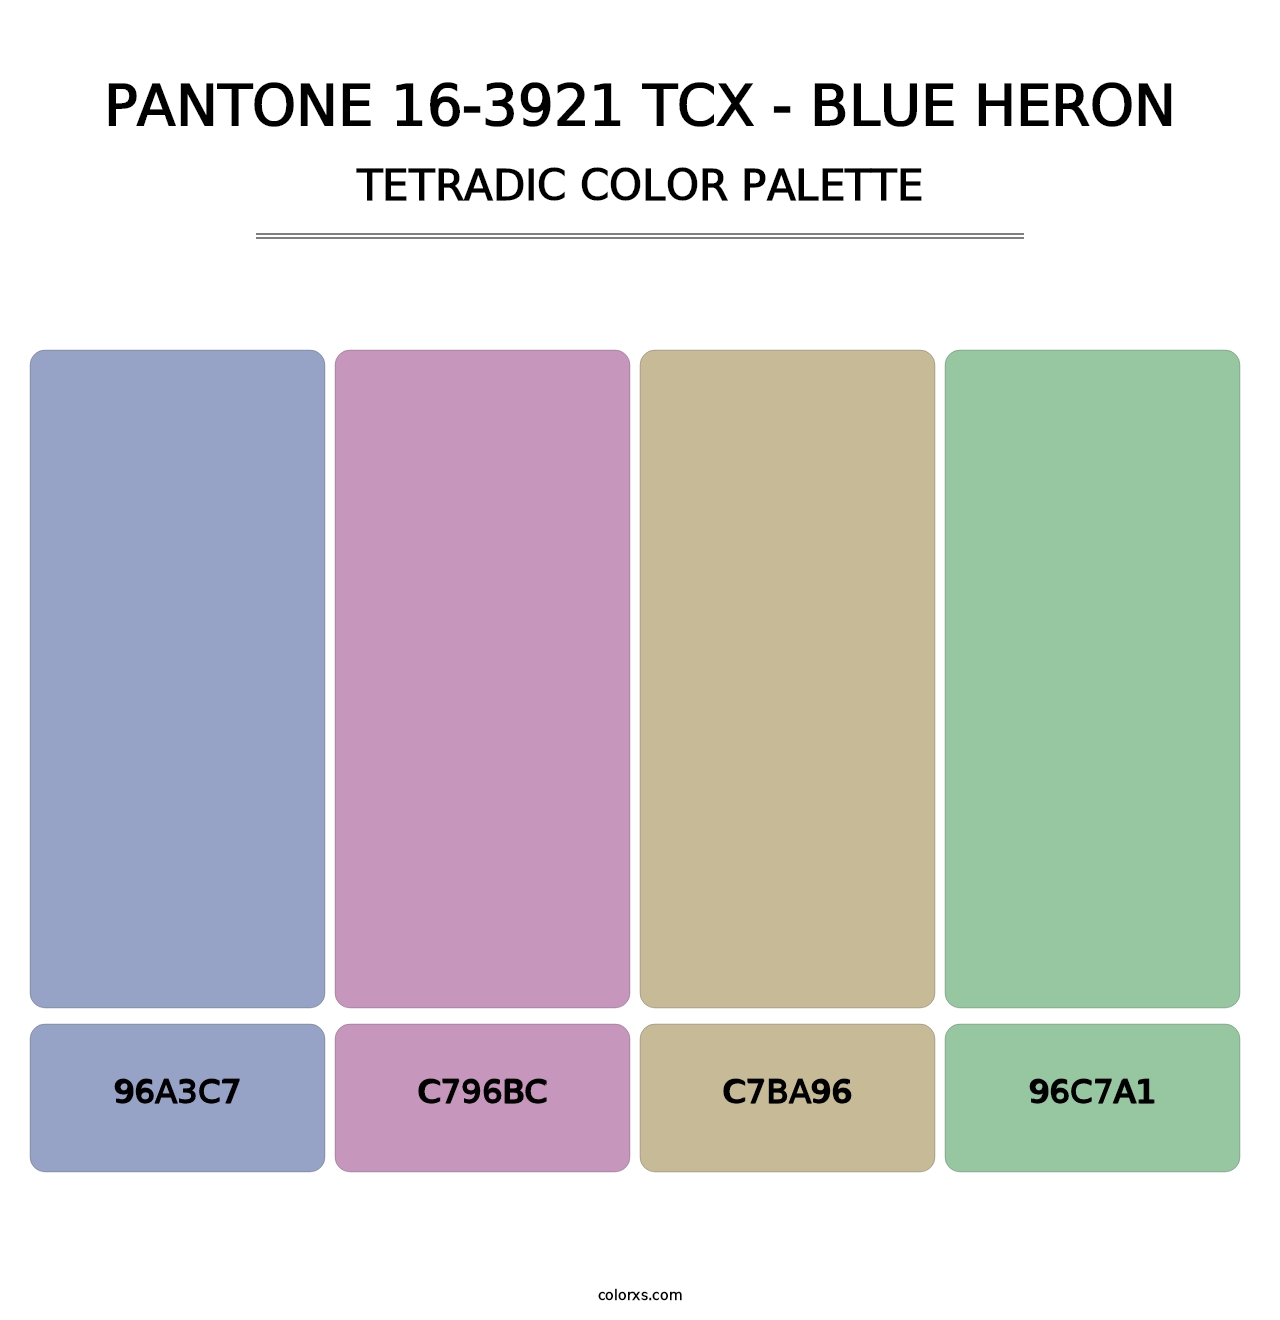 PANTONE 16-3921 TCX - Blue Heron - Tetradic Color Palette